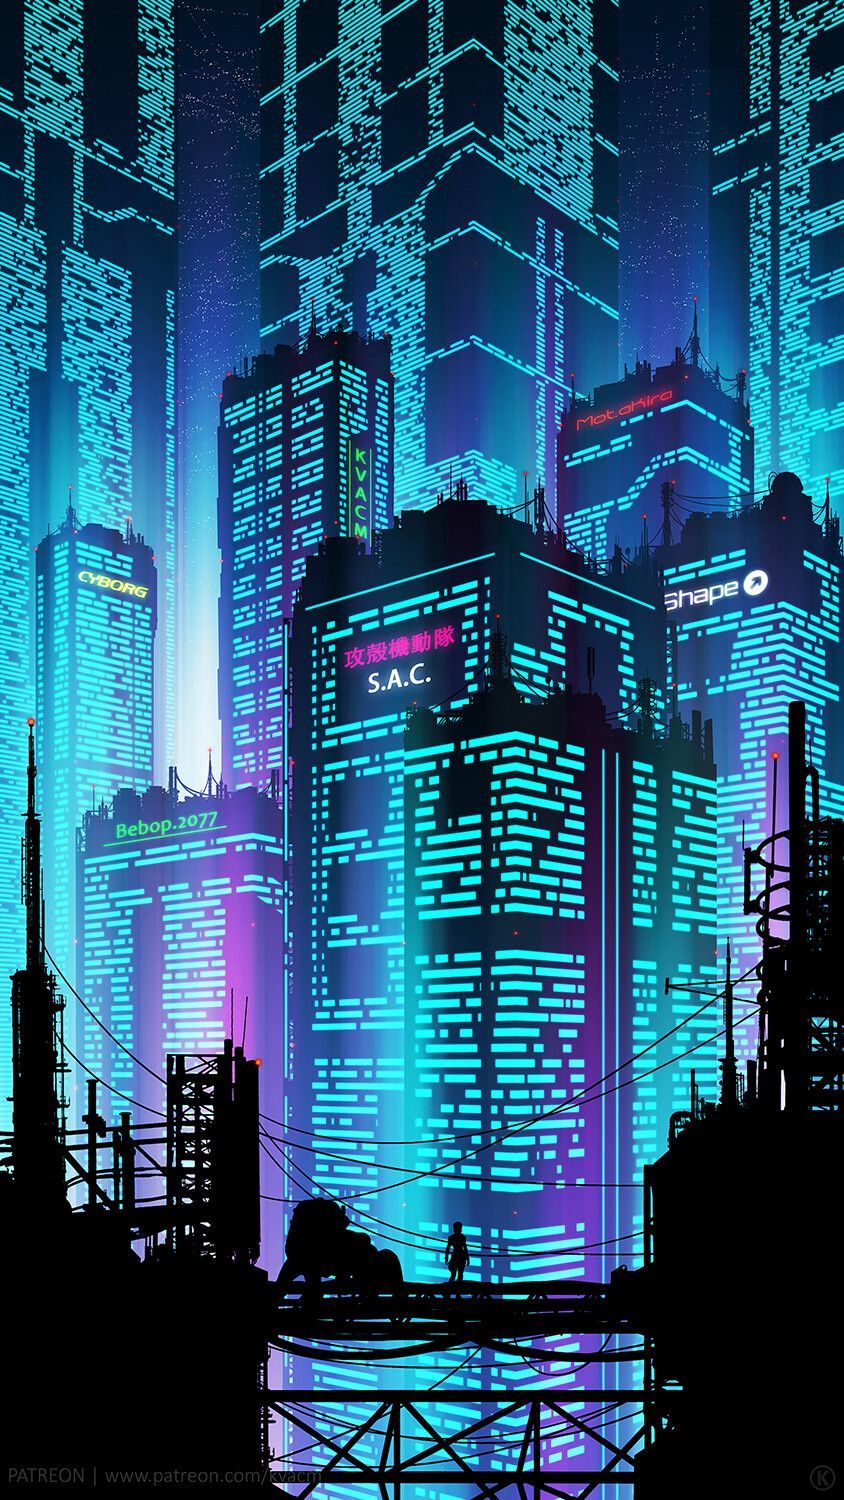 Cyberpunk 2077. Cyberpunk aesthetic, Cyberpunk city, Futuristic city